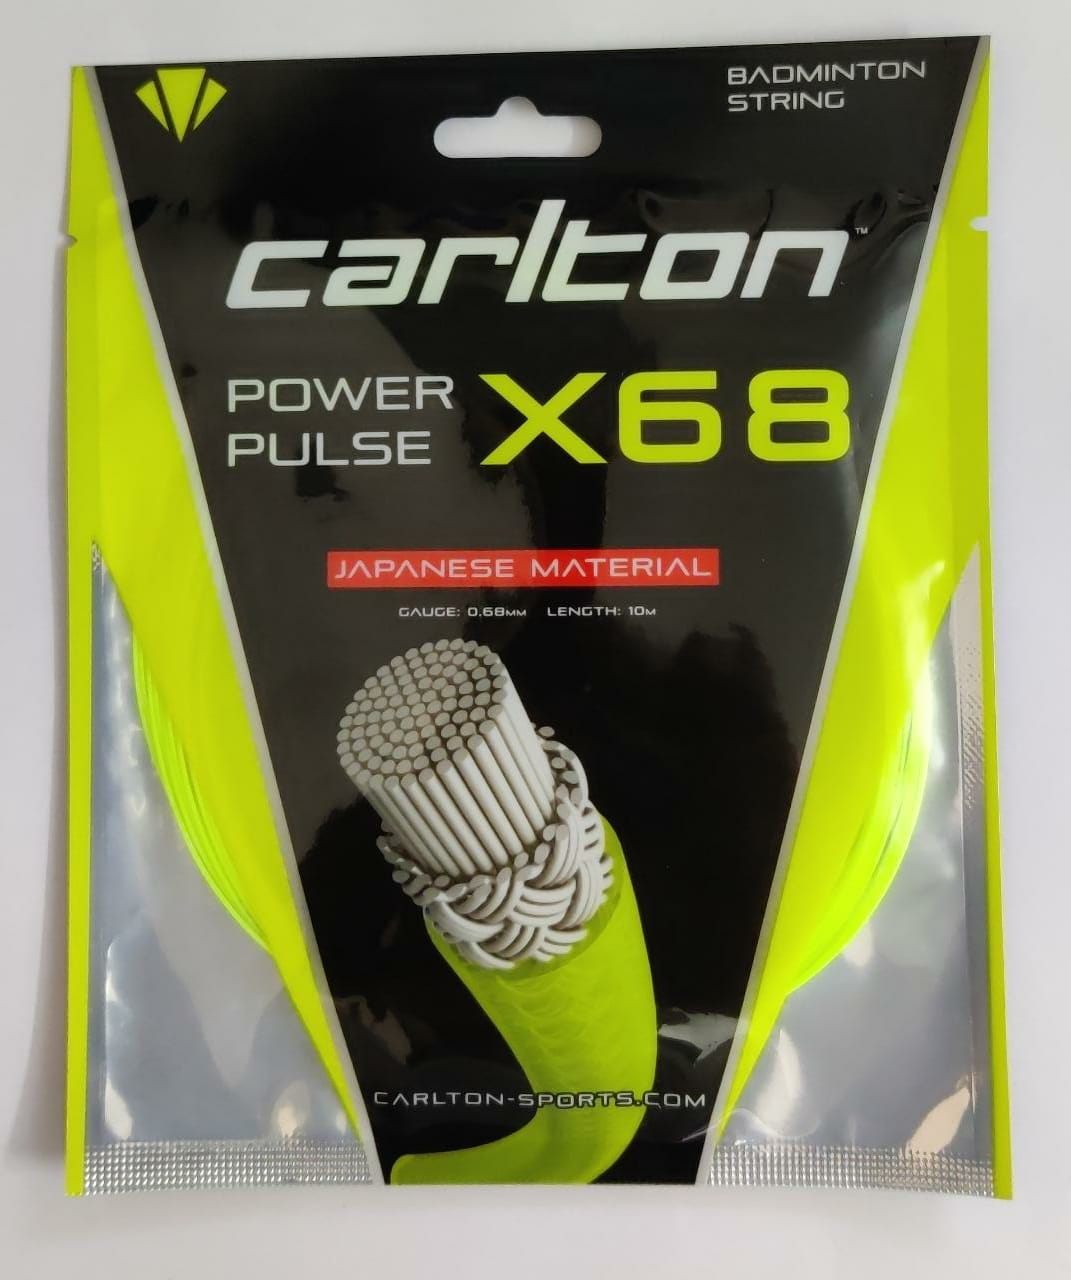 Carlton Power Pulse X68 Badminton String